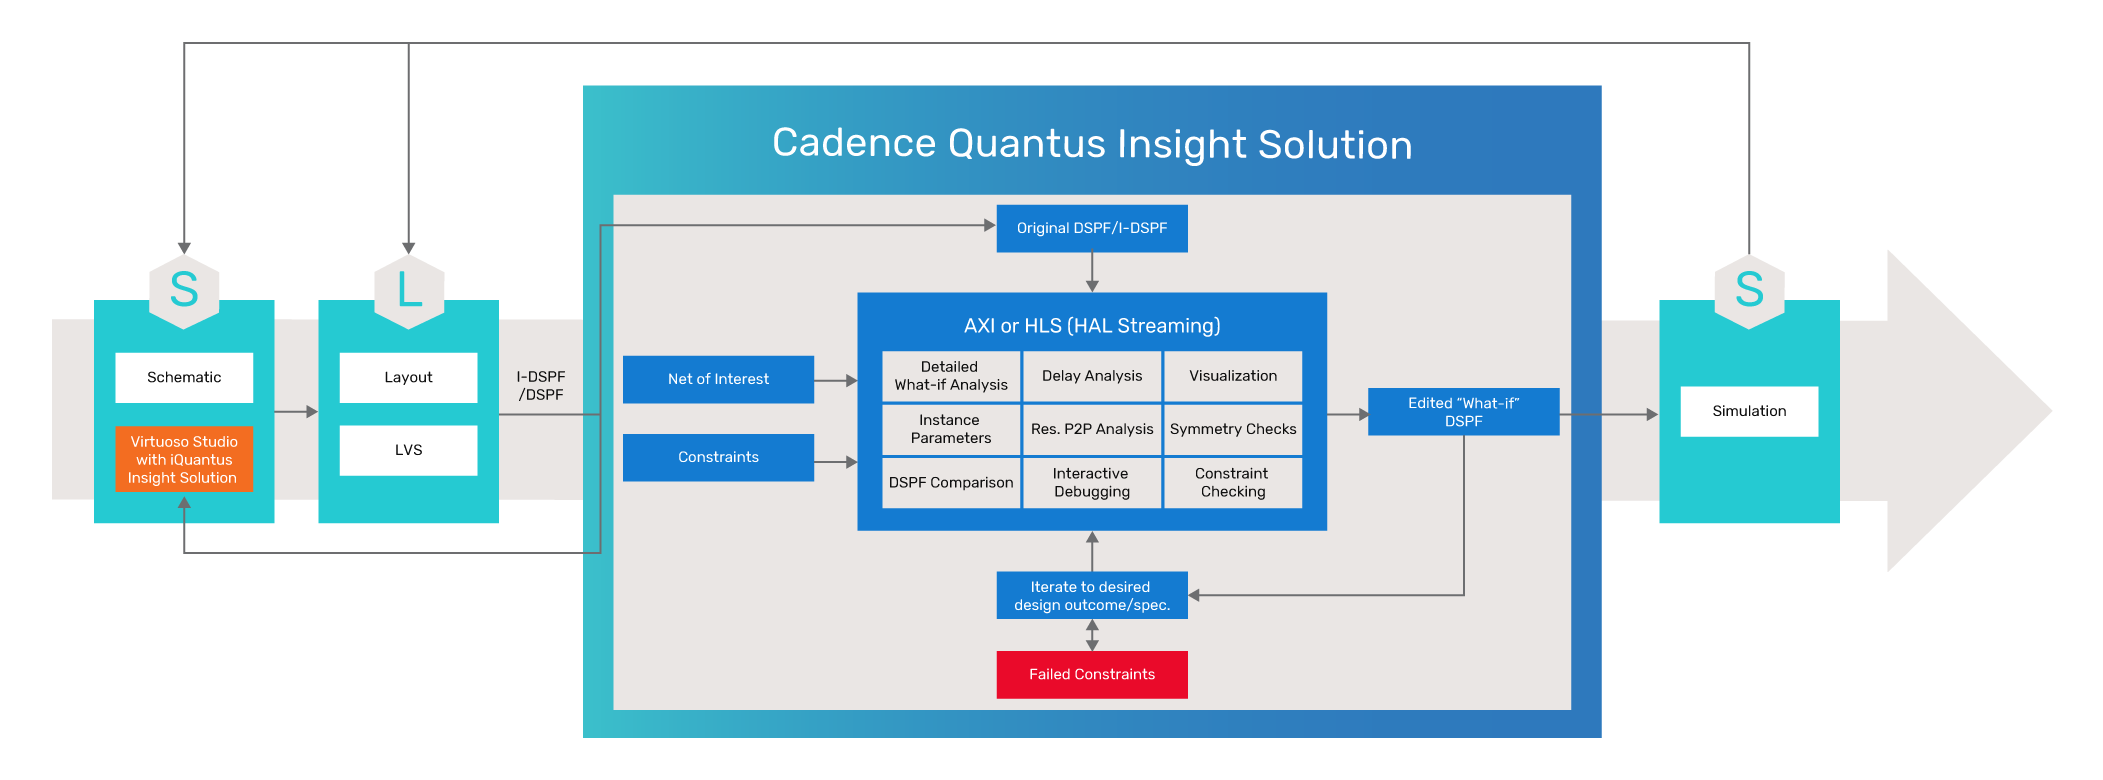 Standout features inside Quantus Insight Solution